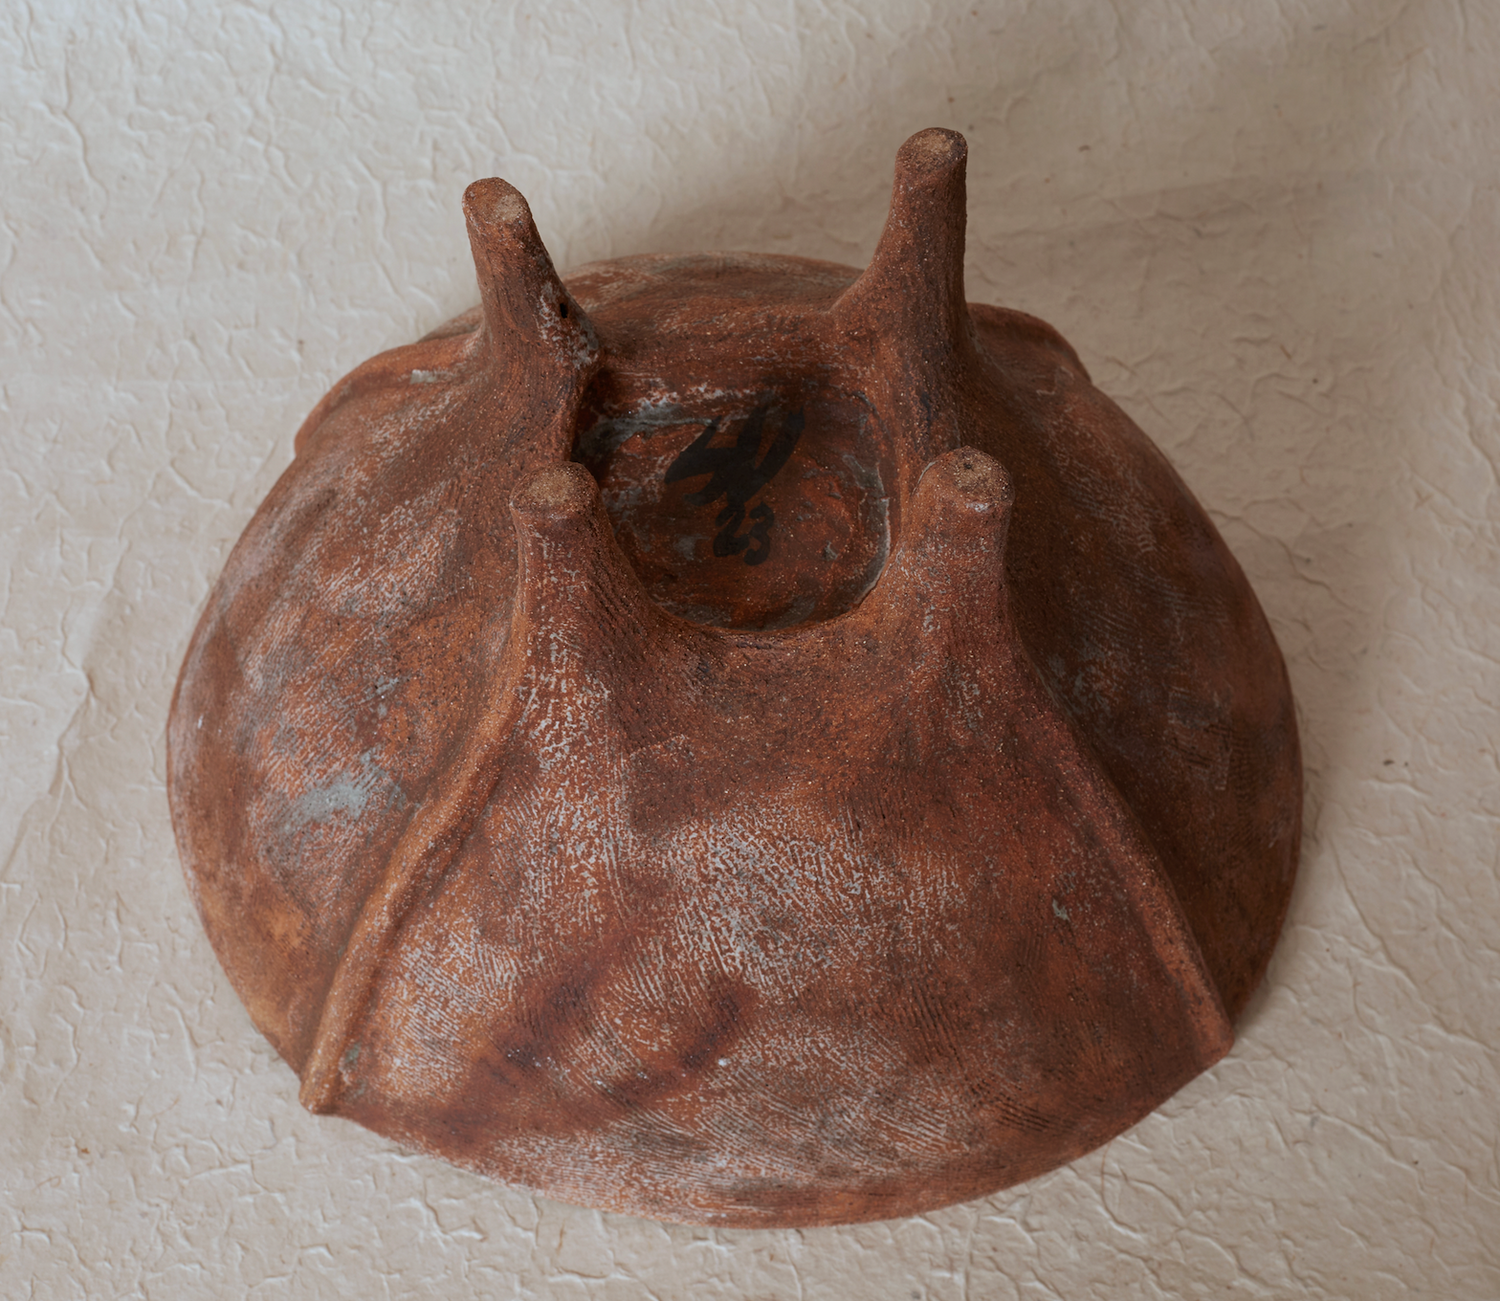 Four-legged hammered bowl